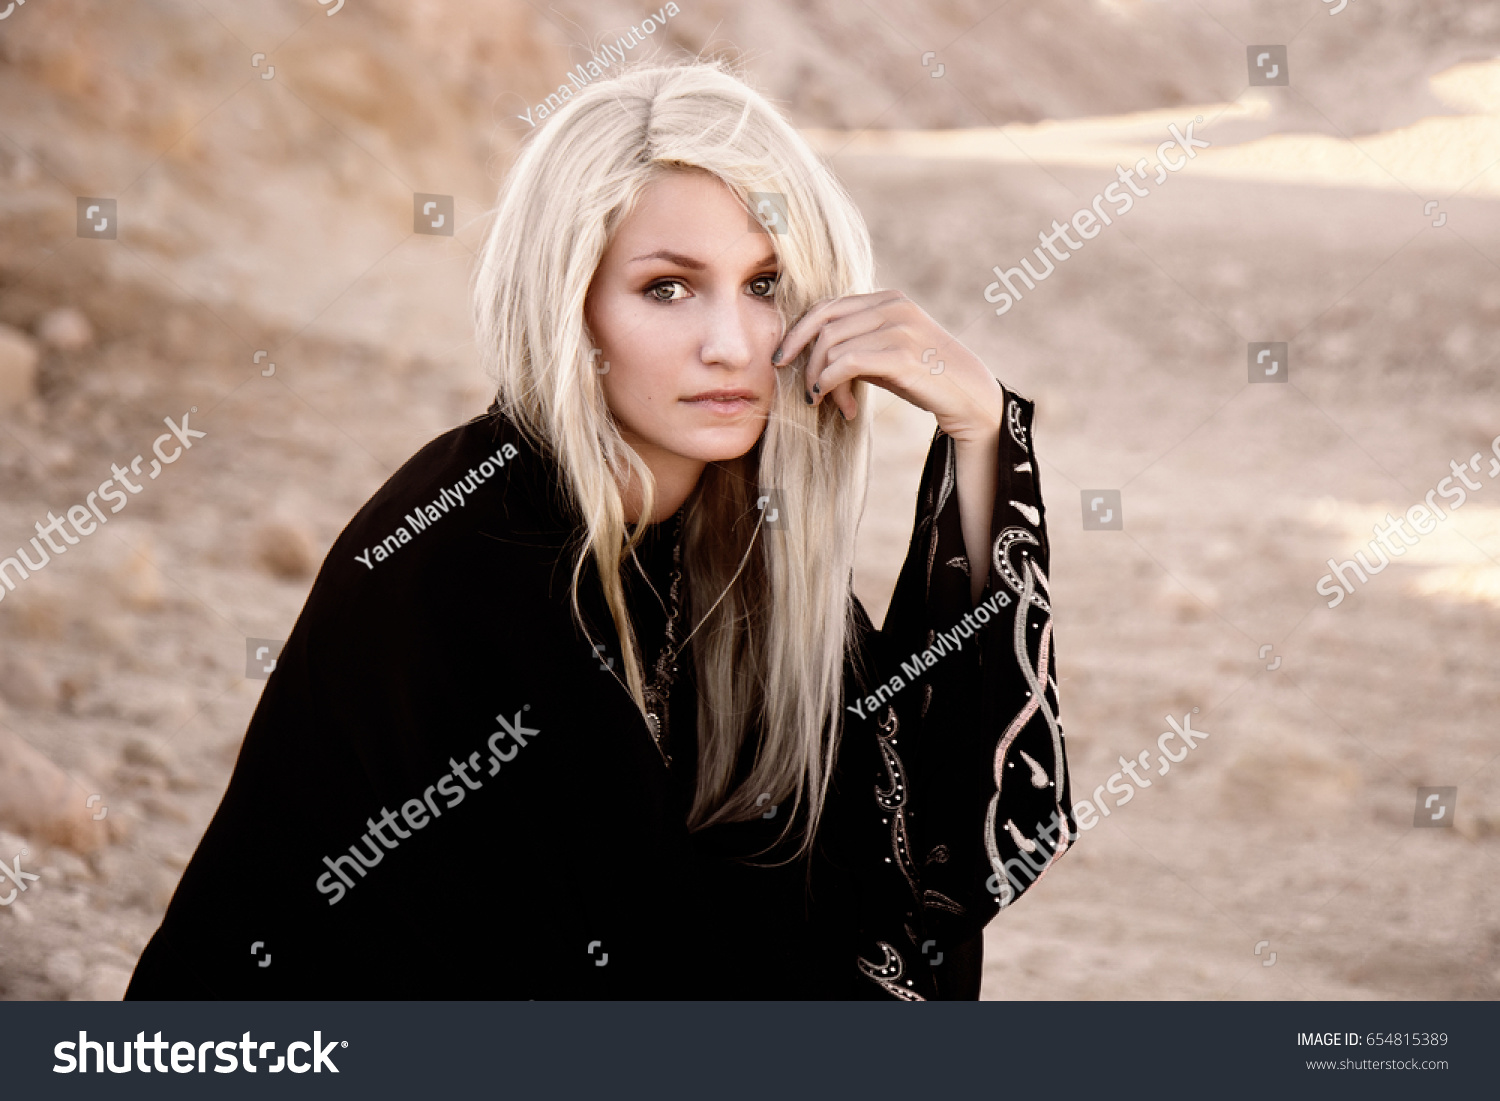 Woman Blond Hair Beautiful Deep Eyes Stock Photo Edit Now 654815389